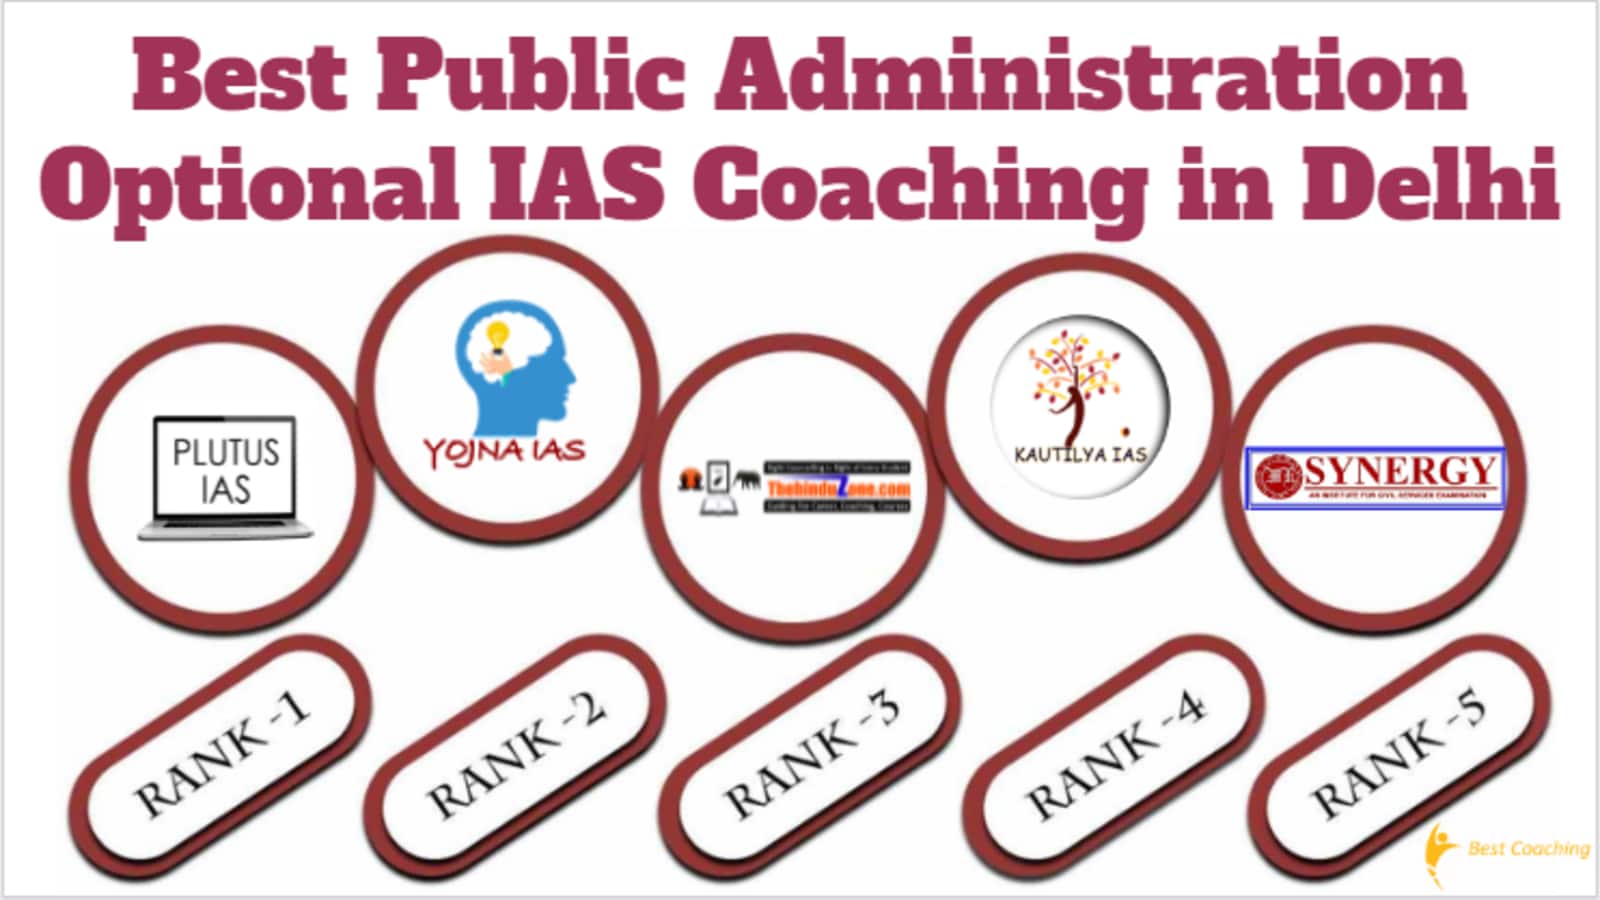 Top Public Administration Optional IAS Coaching 